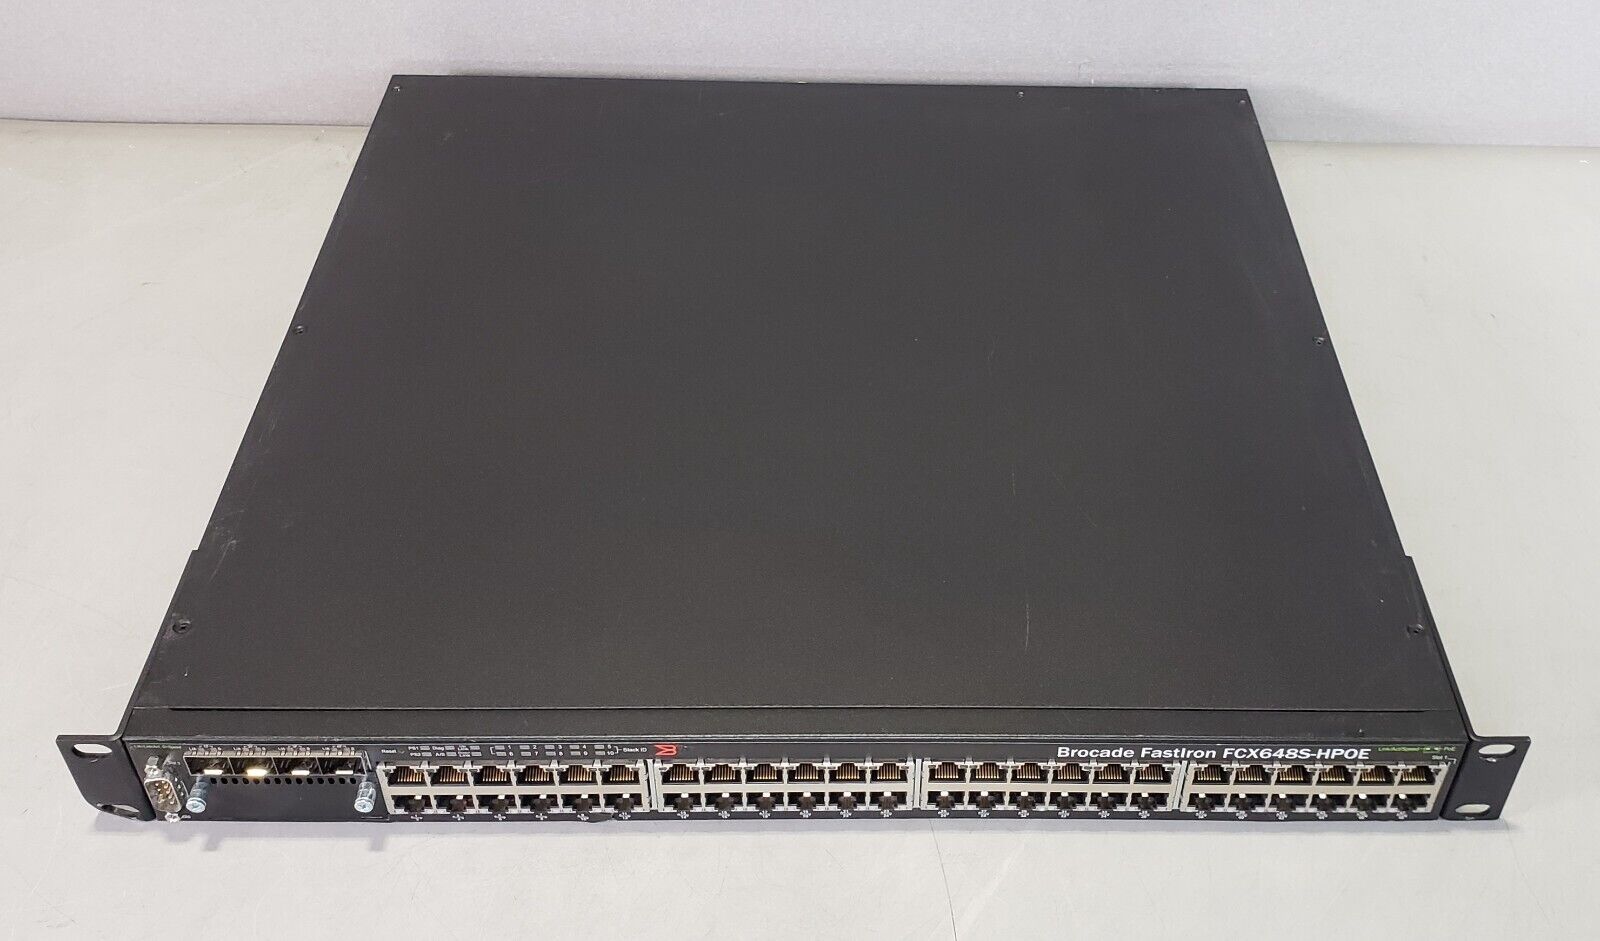 Brocade FastIron FCX648S-HPOE 48 Port Gigabit PoE+ Ethernet Switch